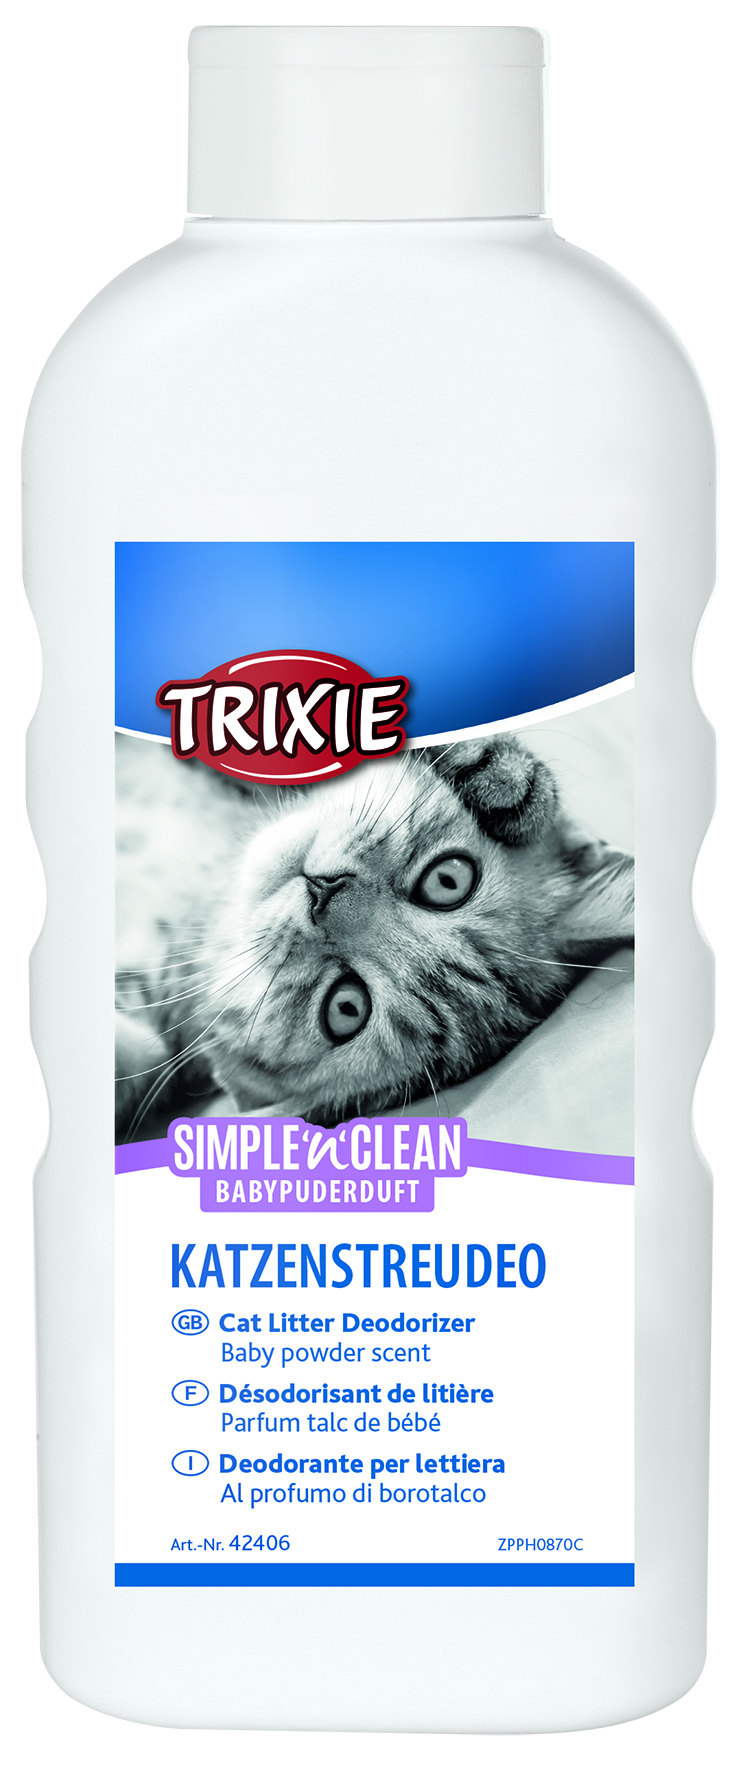 Trixie Simple'n'Clean Katzenstreudeo, Babypuderduft, 750 g